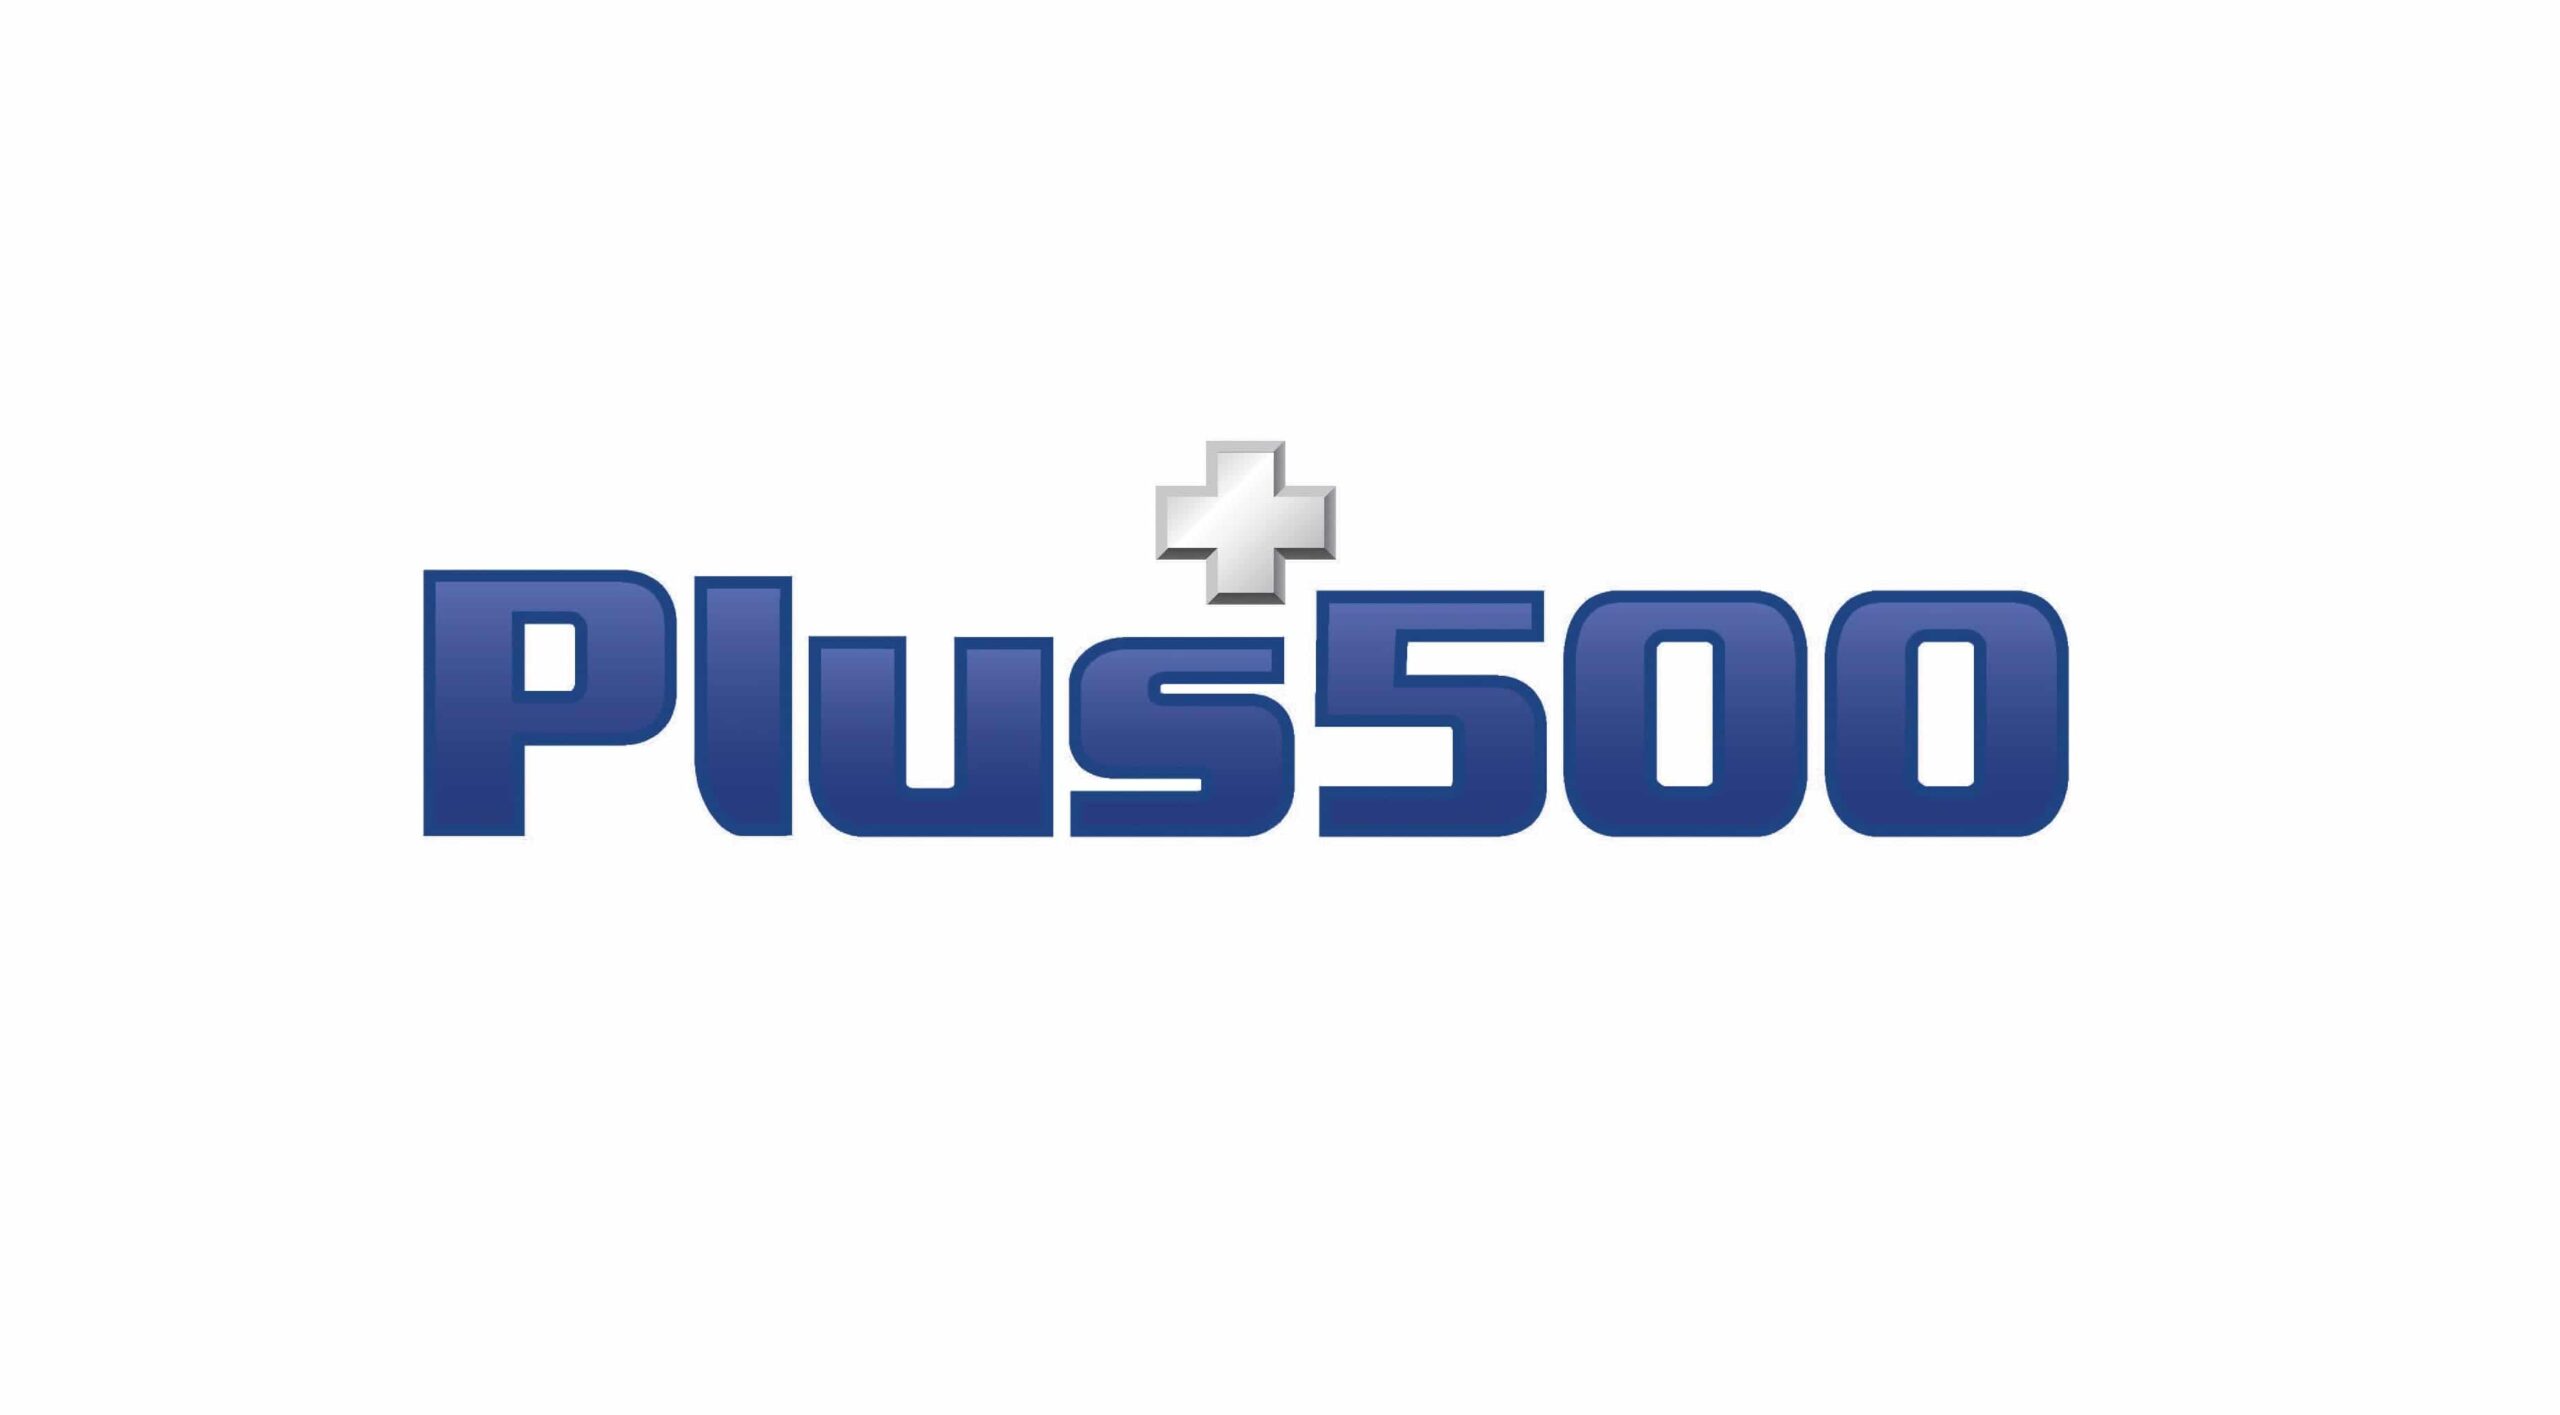 Plus500 Q2 revenue jumps 68%, company launches U.S. trading platform